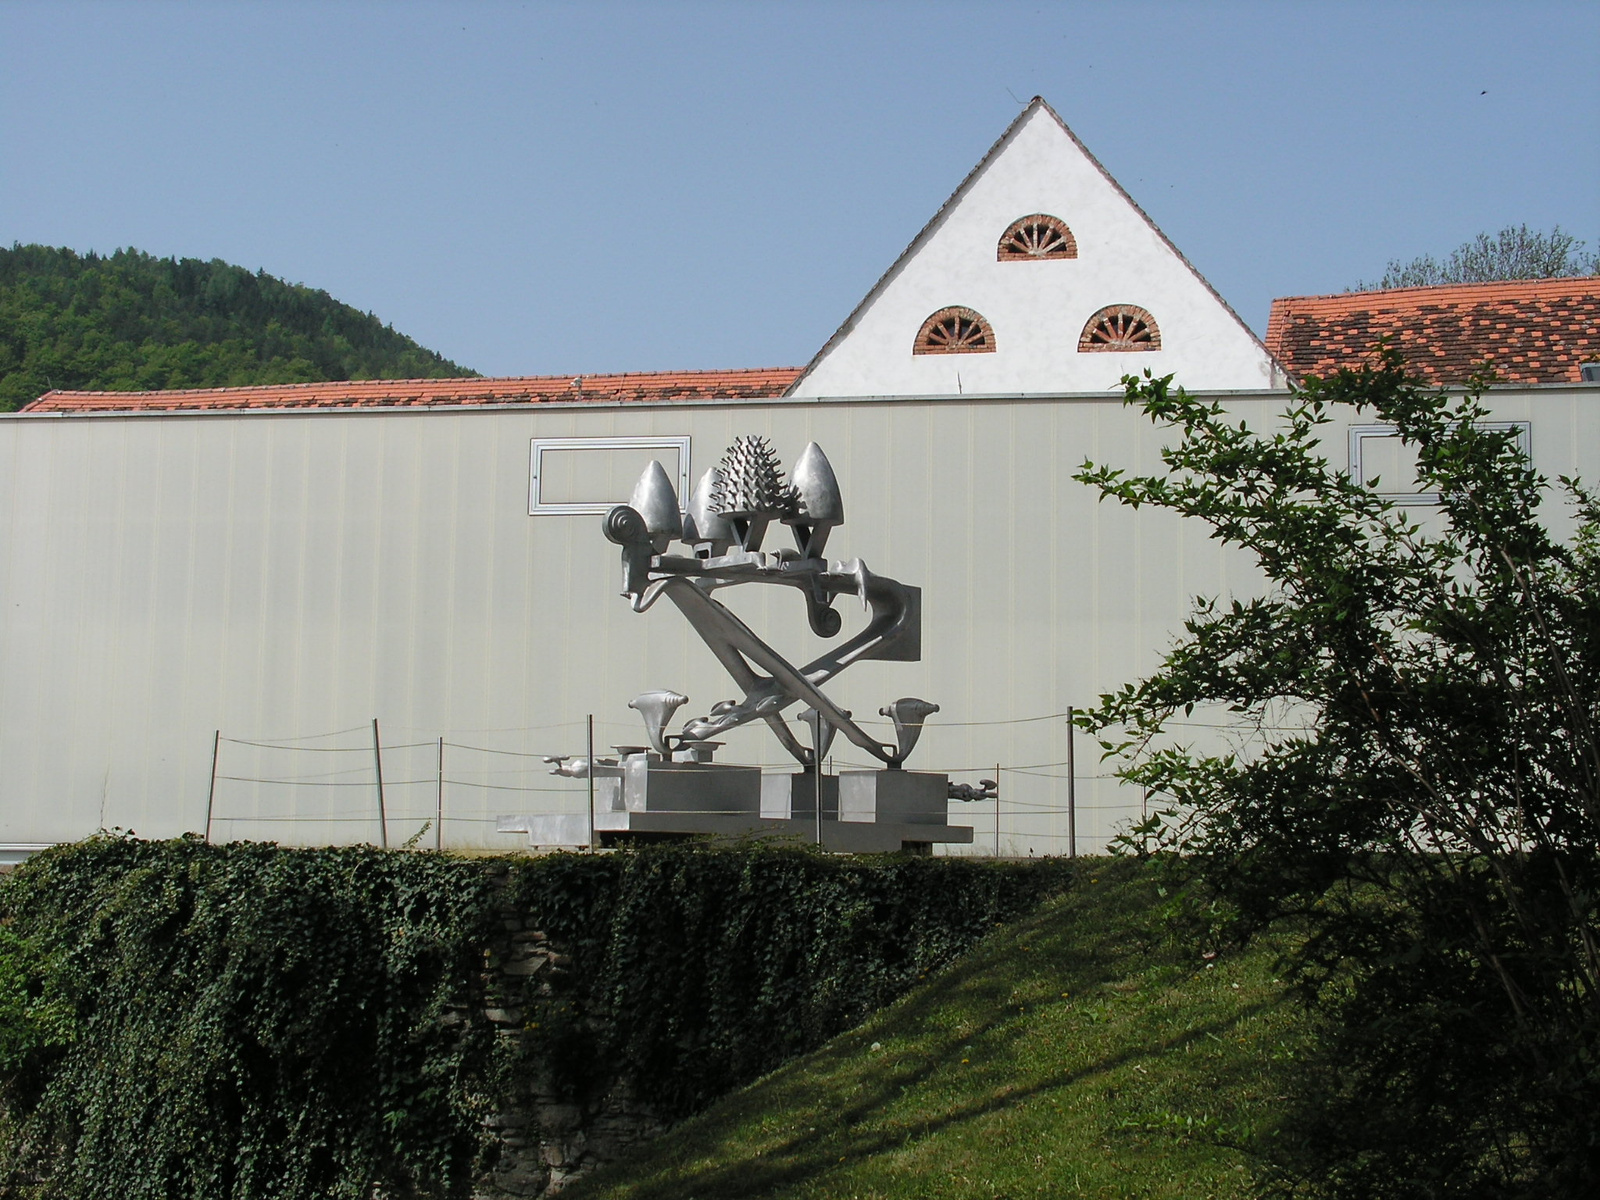 Herberstein, a Gironcoli múzeum, SzG3